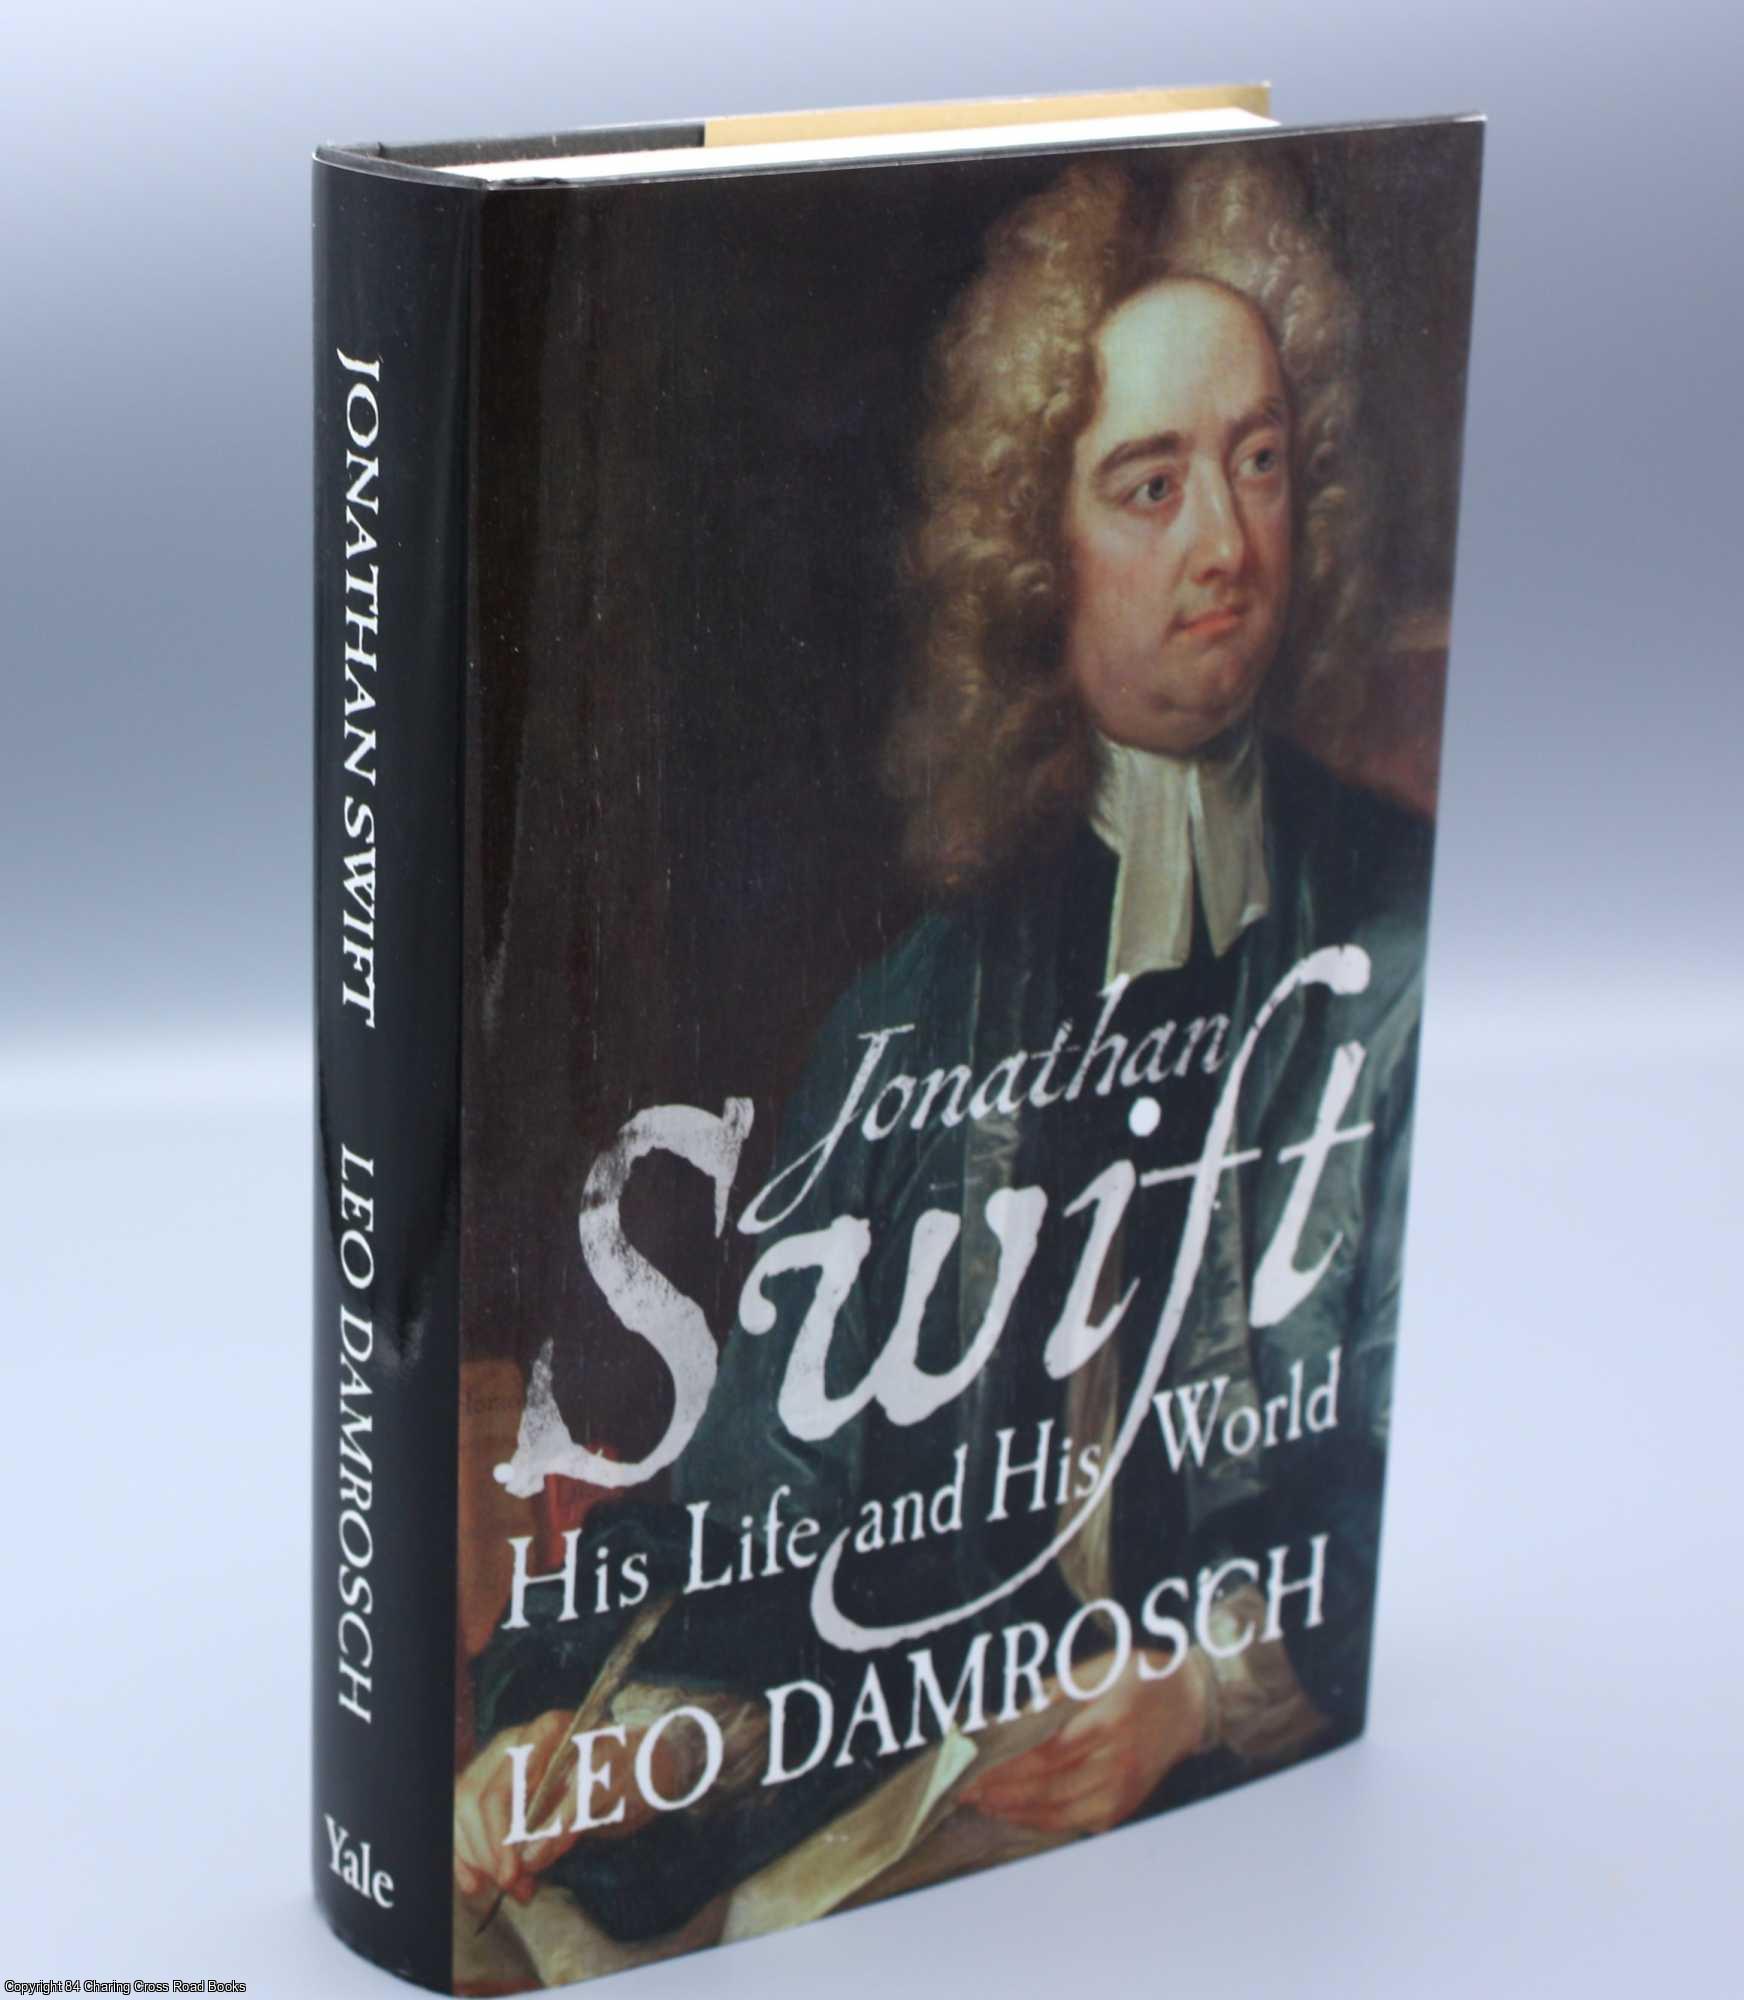 Damrosch, Leo - Jonathan Swift: His Life and His World